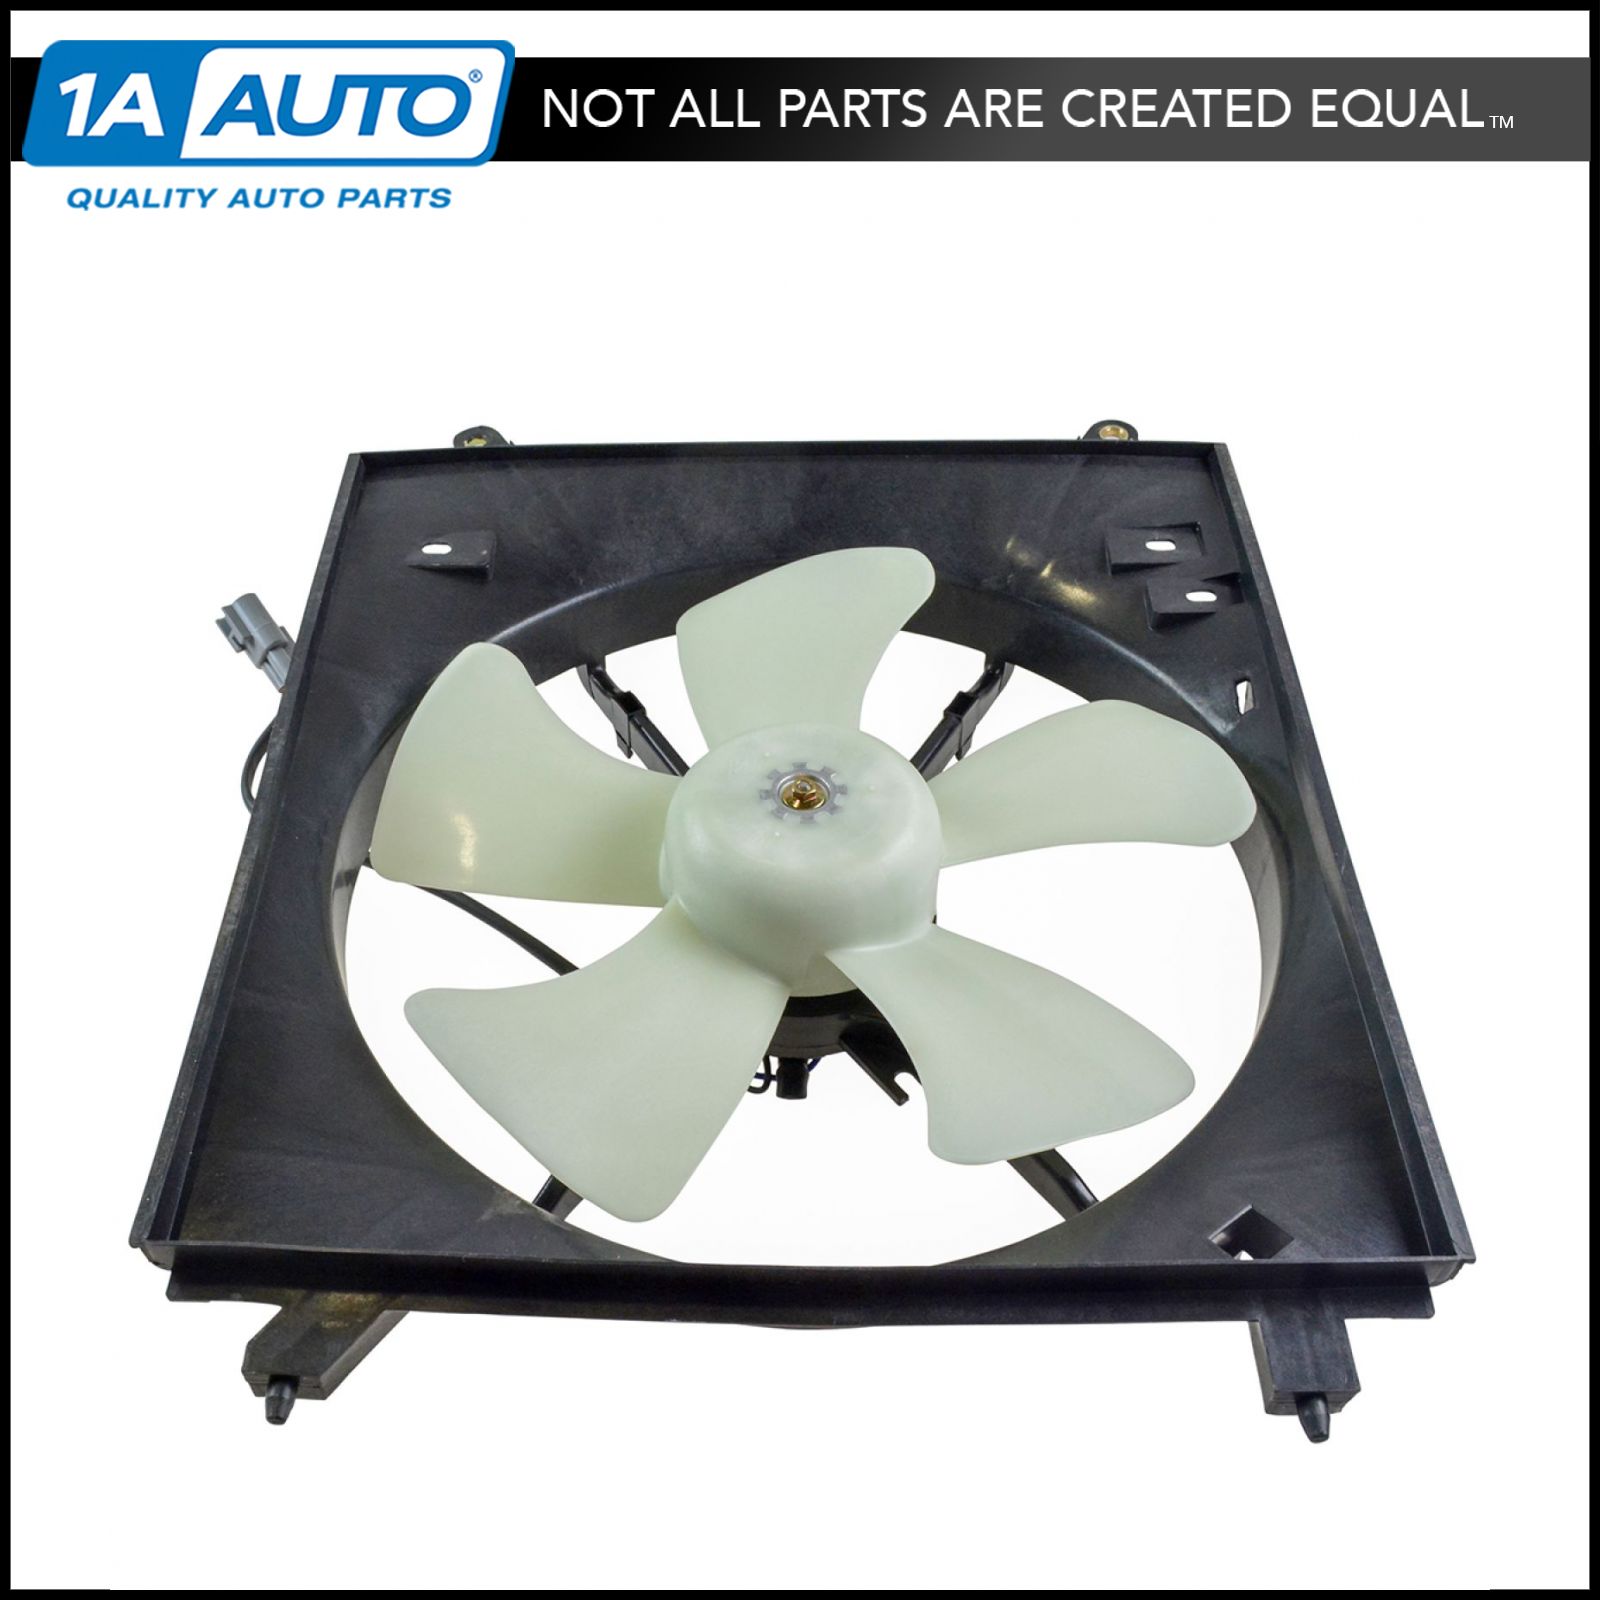 Dual Radiator AC Cooling Fan w// Motor for Toyota Camry Solara 2.4L